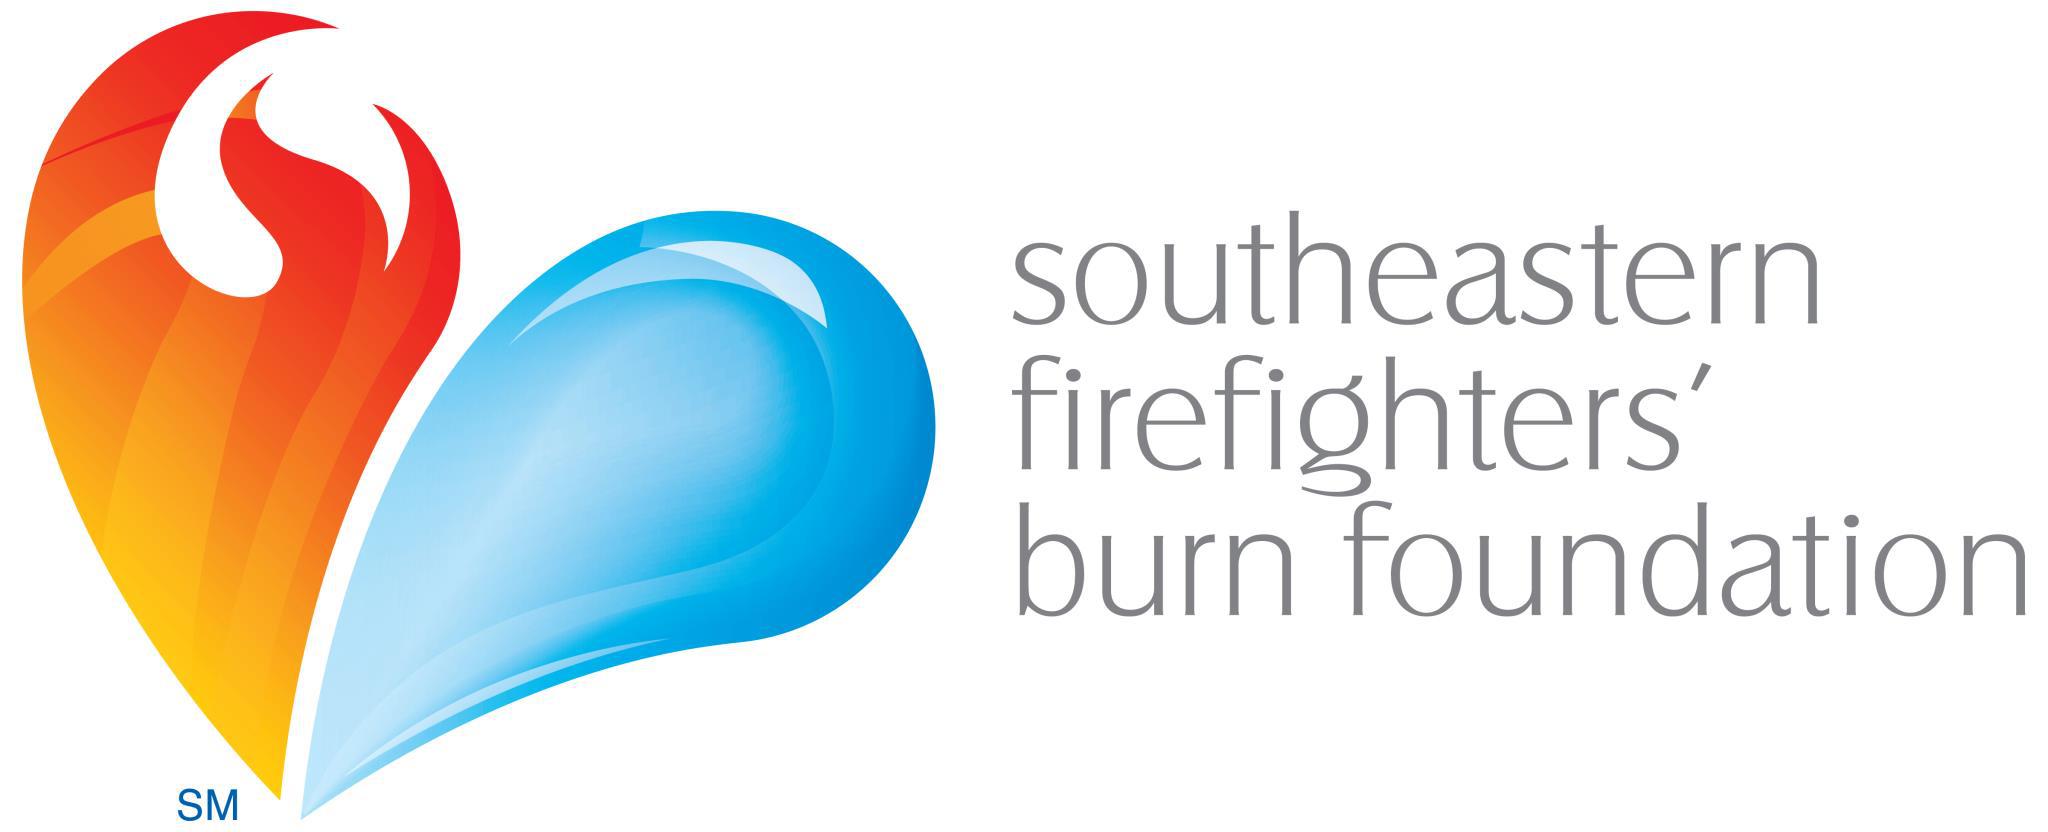 Southeastern Firefighters Burn Foundation